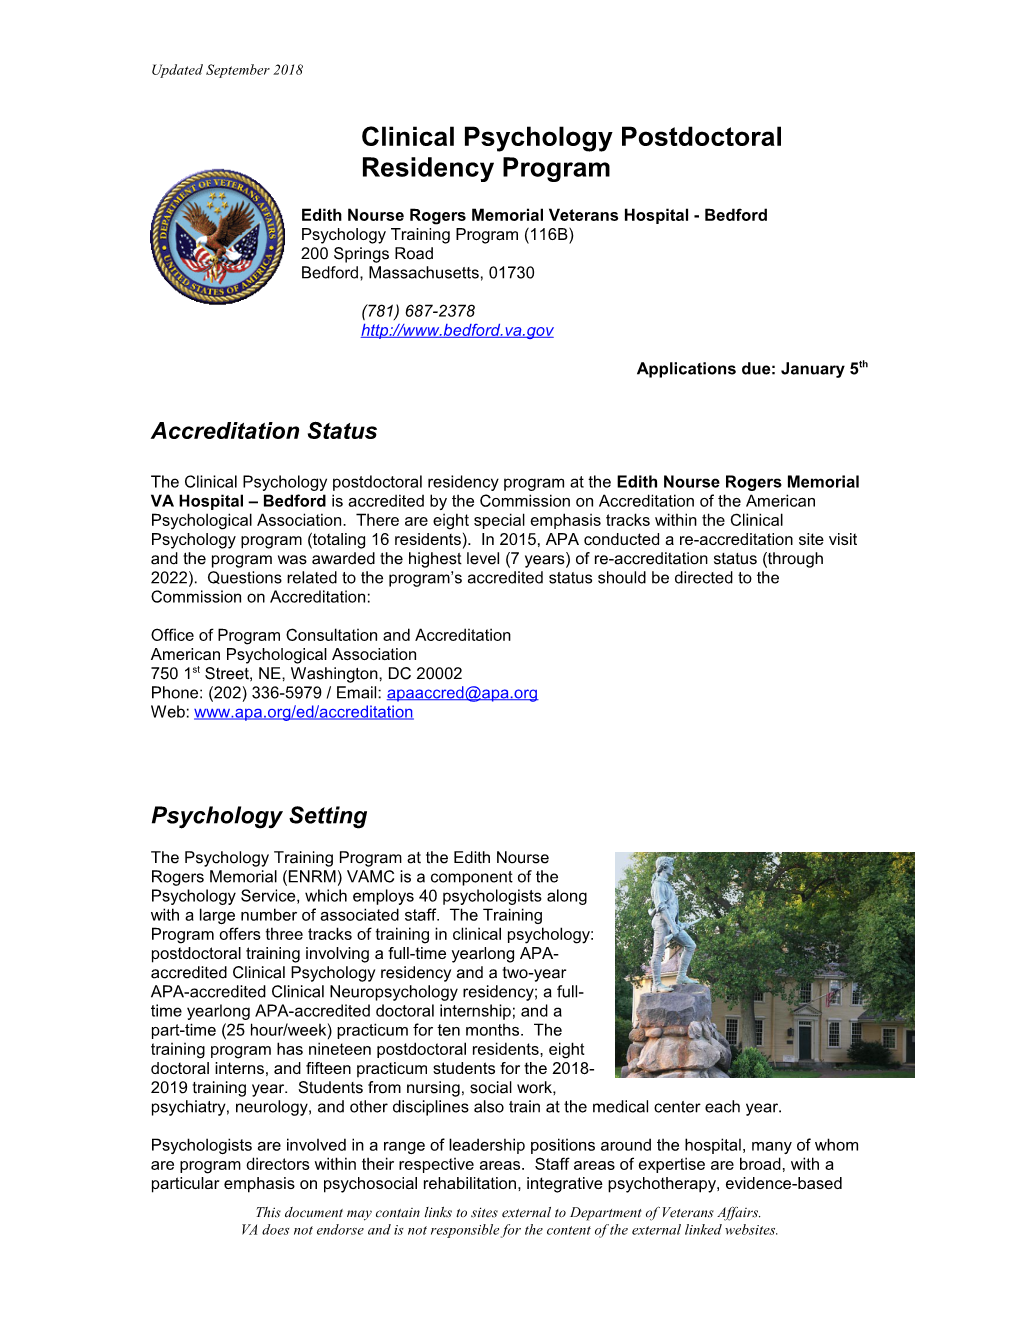 VA Bedford Healthcare System Psychology Residency Program